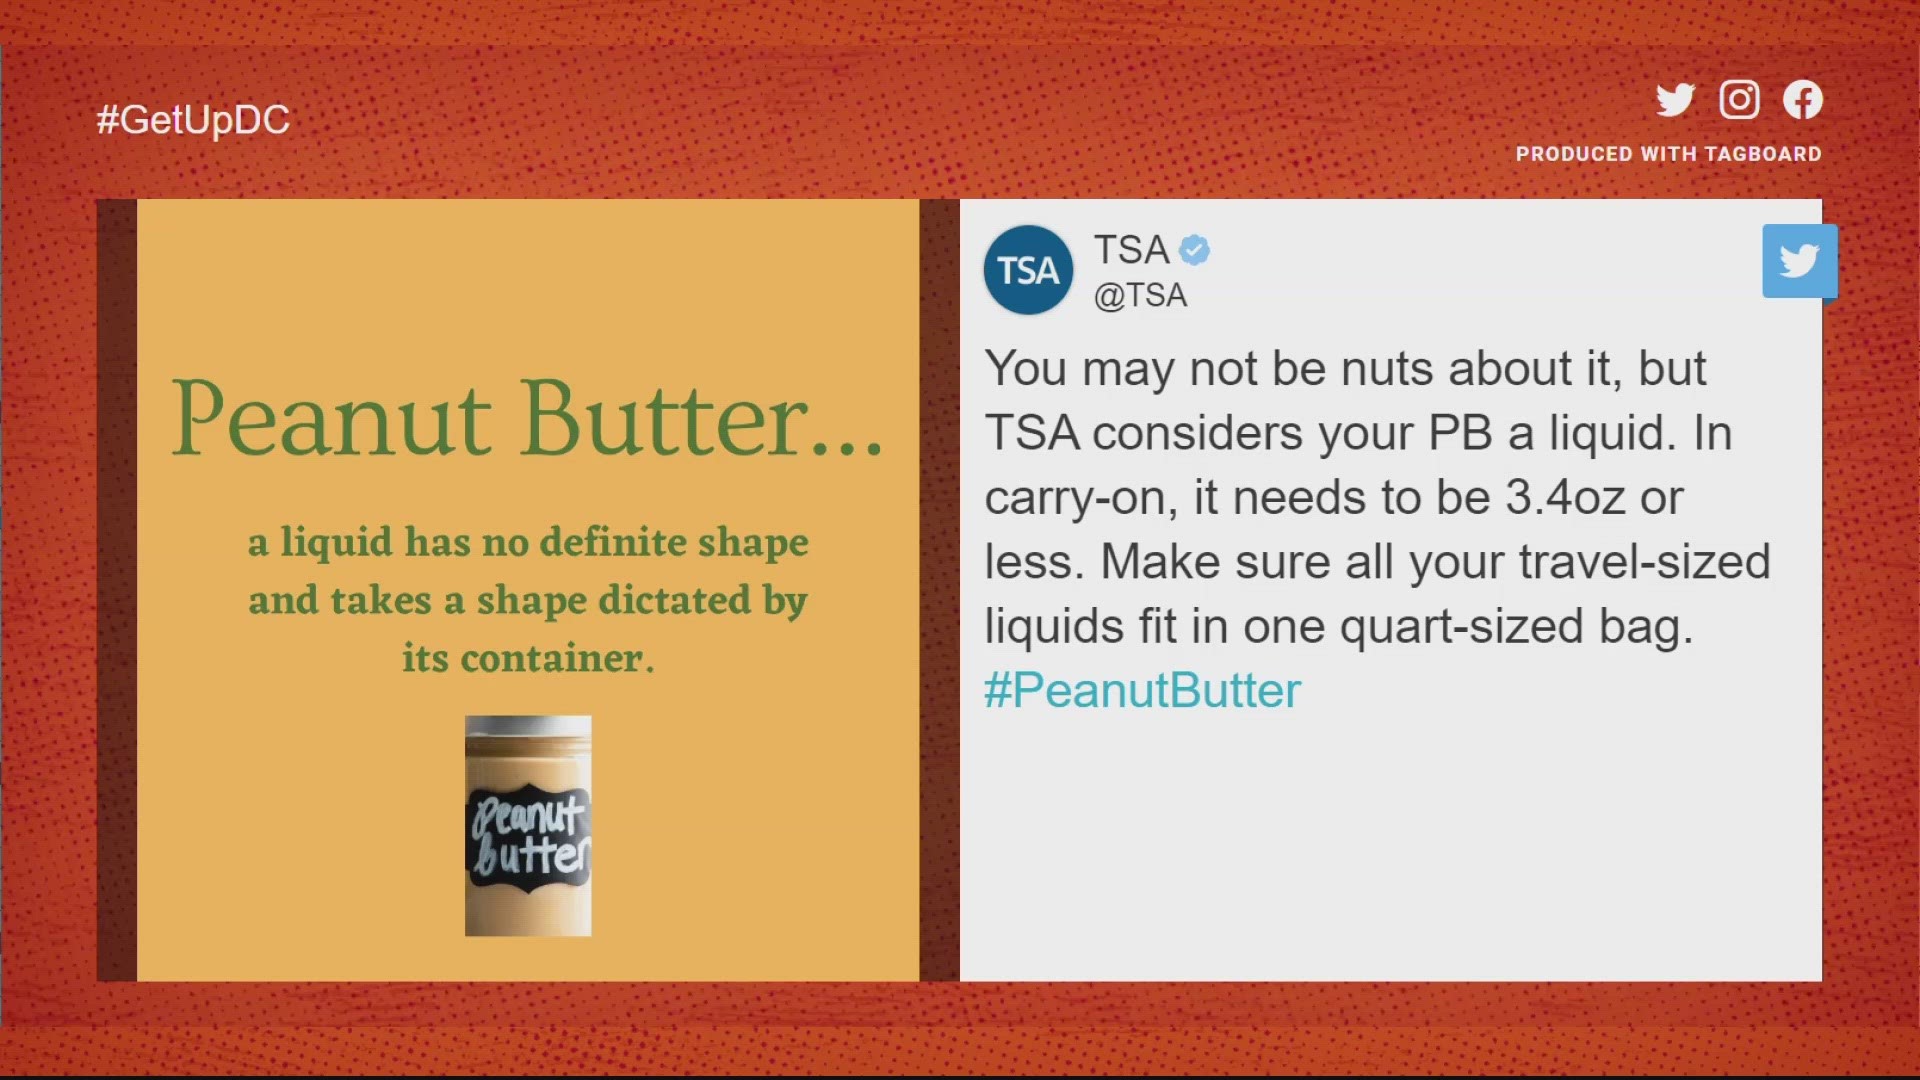 The TSA considers peanut butter a liquid, sparking debate.